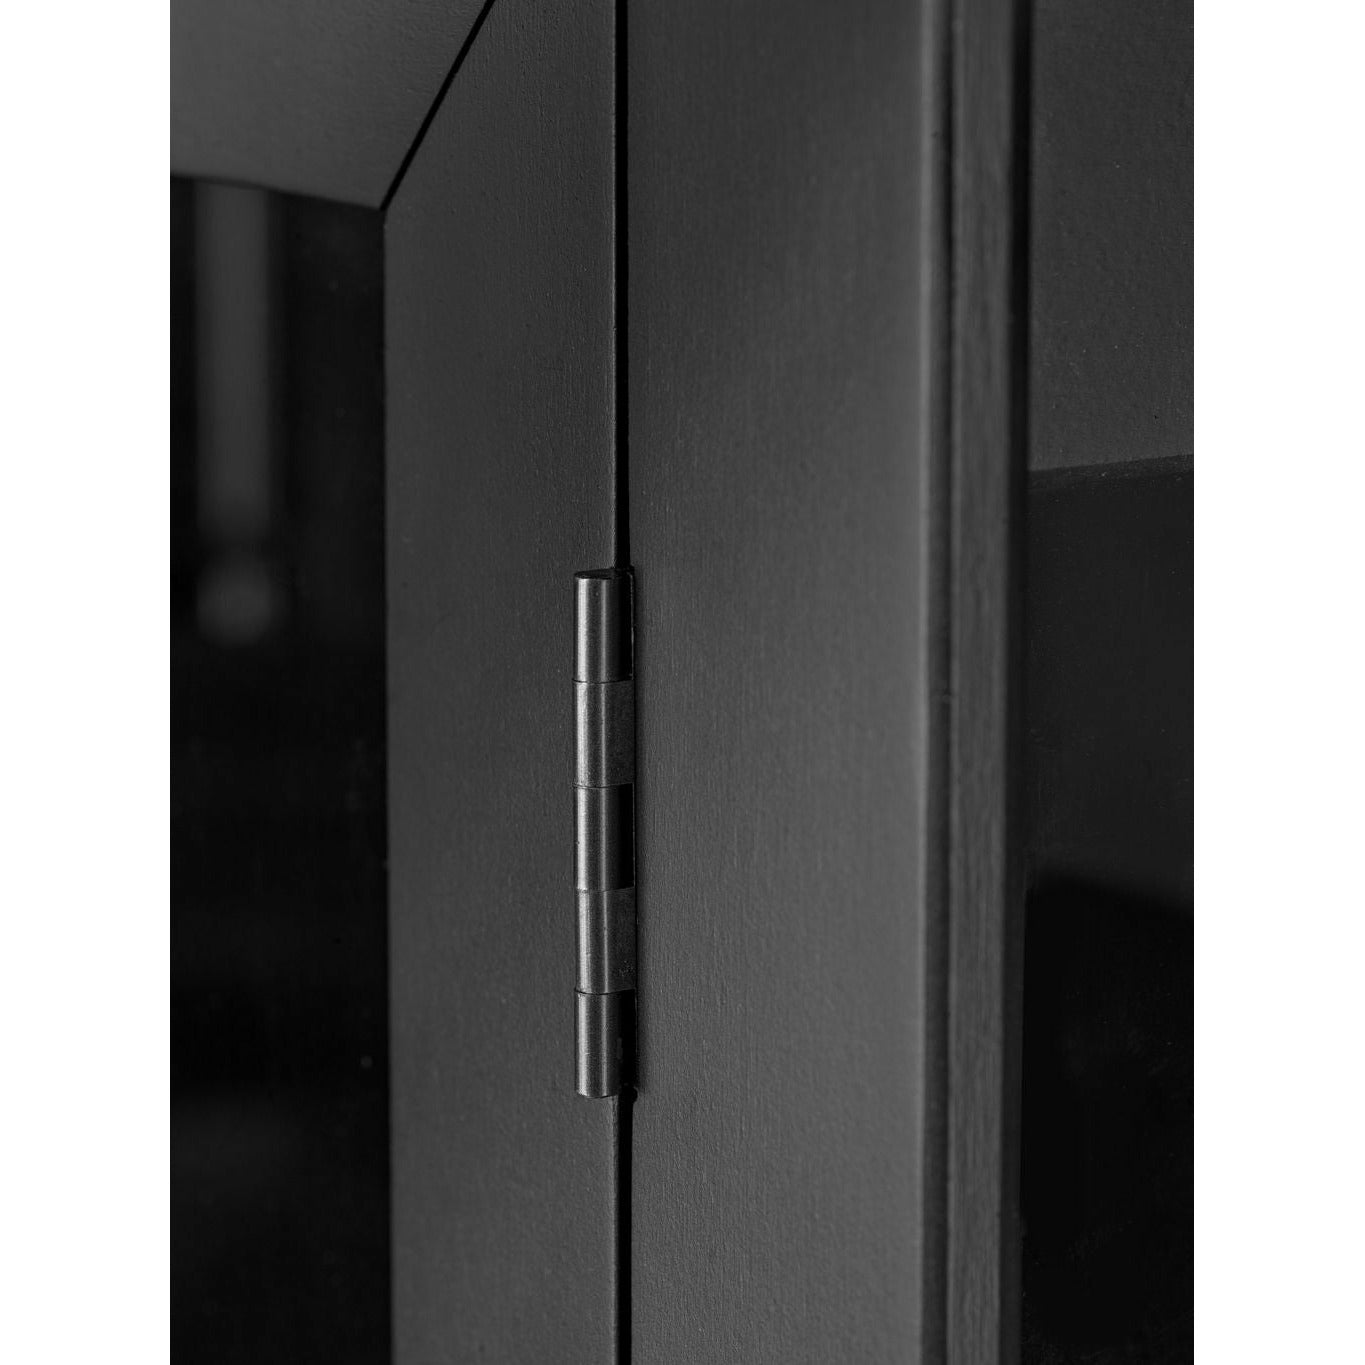 FDB Møbler A90 stallar Display Cabinet Beech Black Painted, H: 127 cm